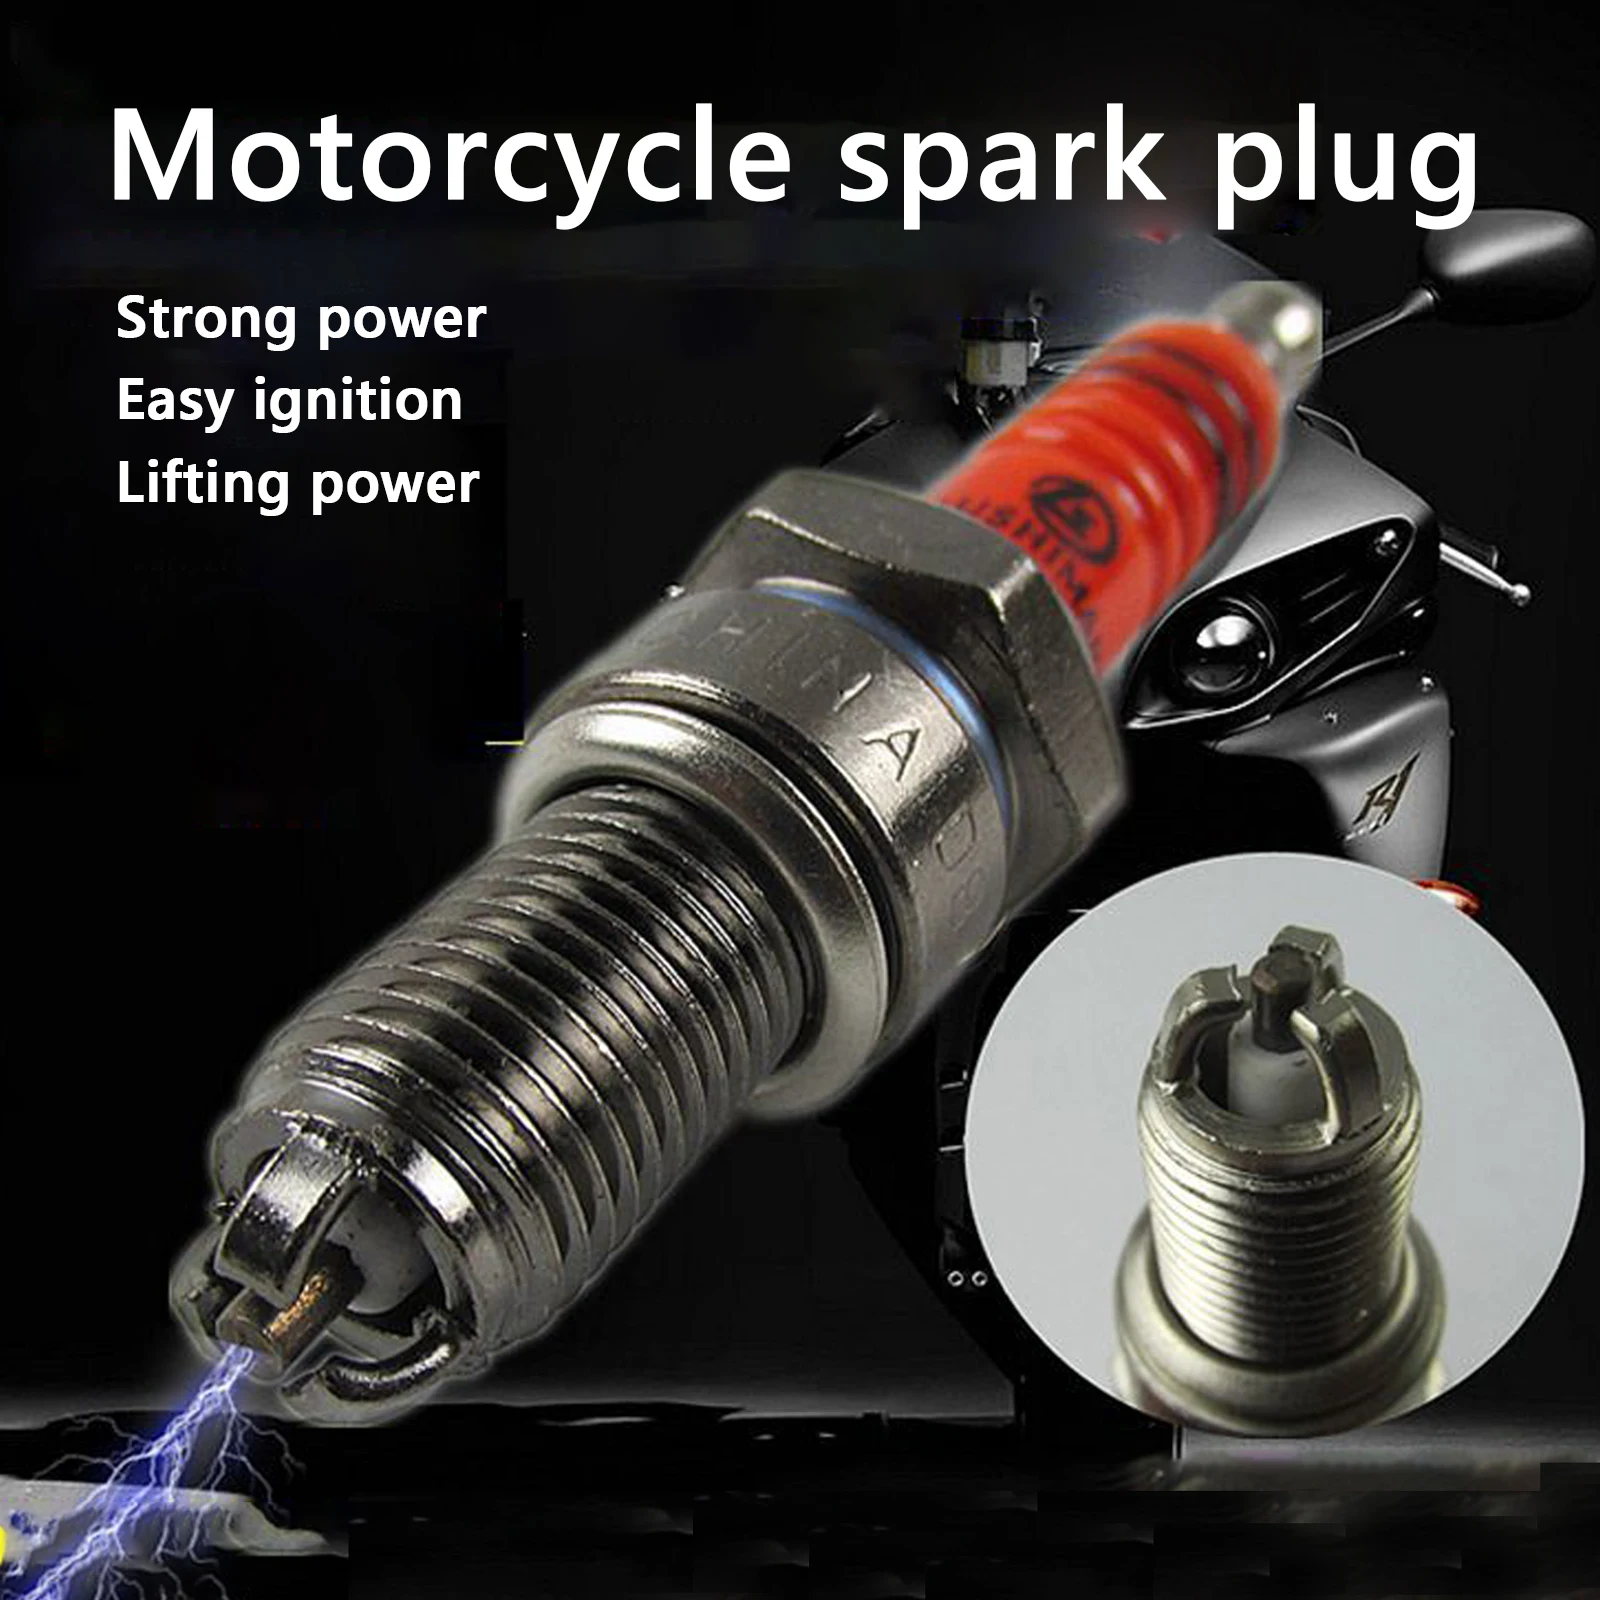 

1PCS 3 Electrode Spark Plug A7TC for GY6 50cc 110cc 125cc 150cc Atv Scooter Dirt Bike Go Kart ATV Motorcycle Corresponding New